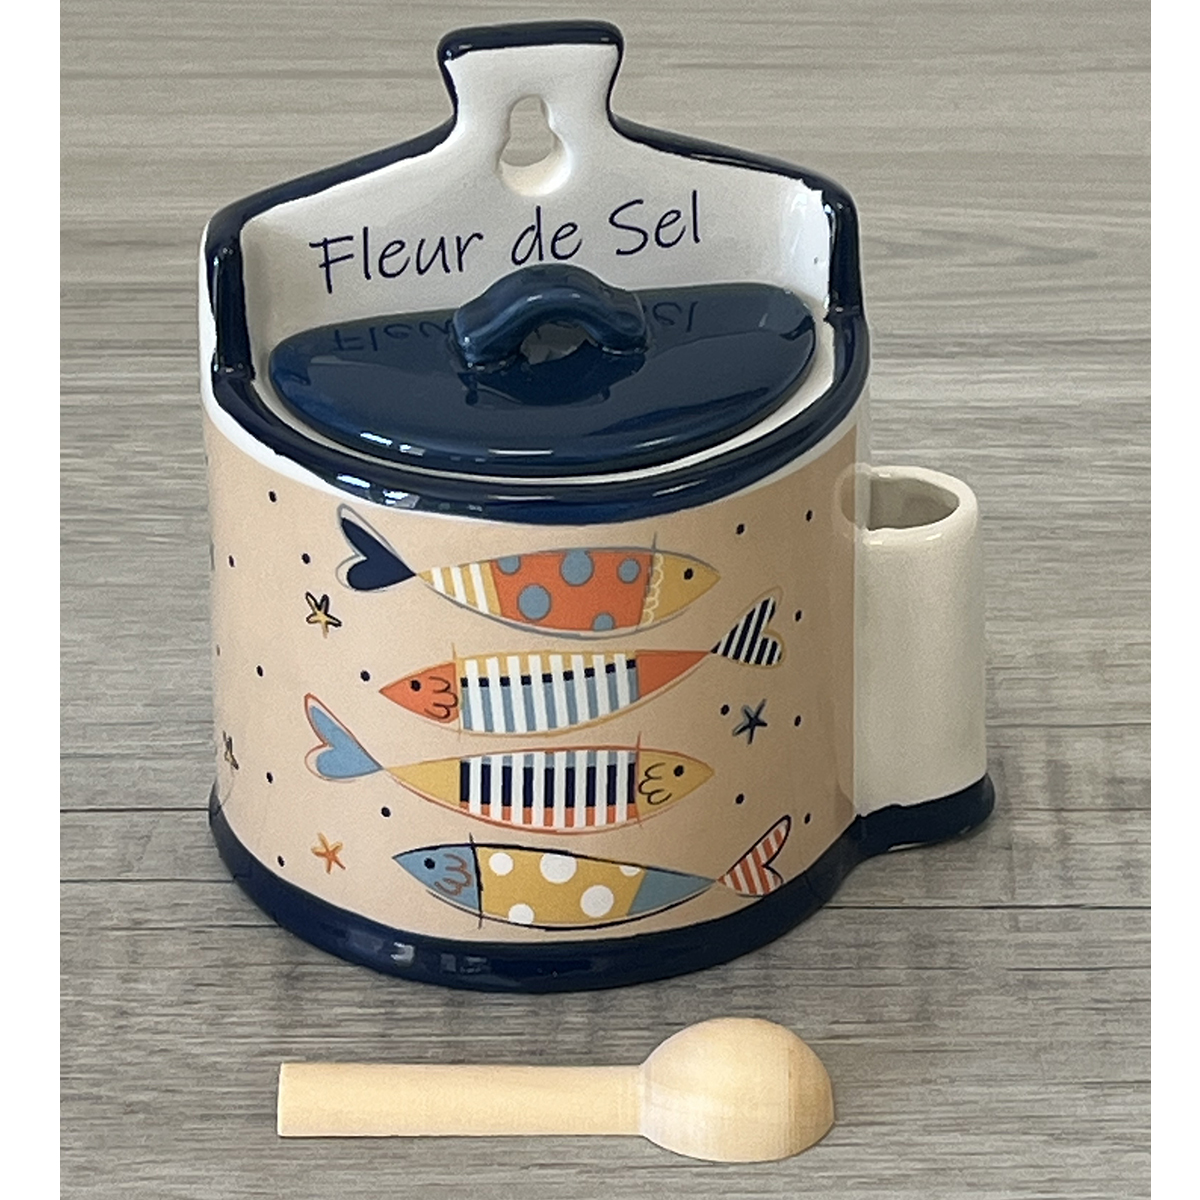 Ceramic salt box with spoon